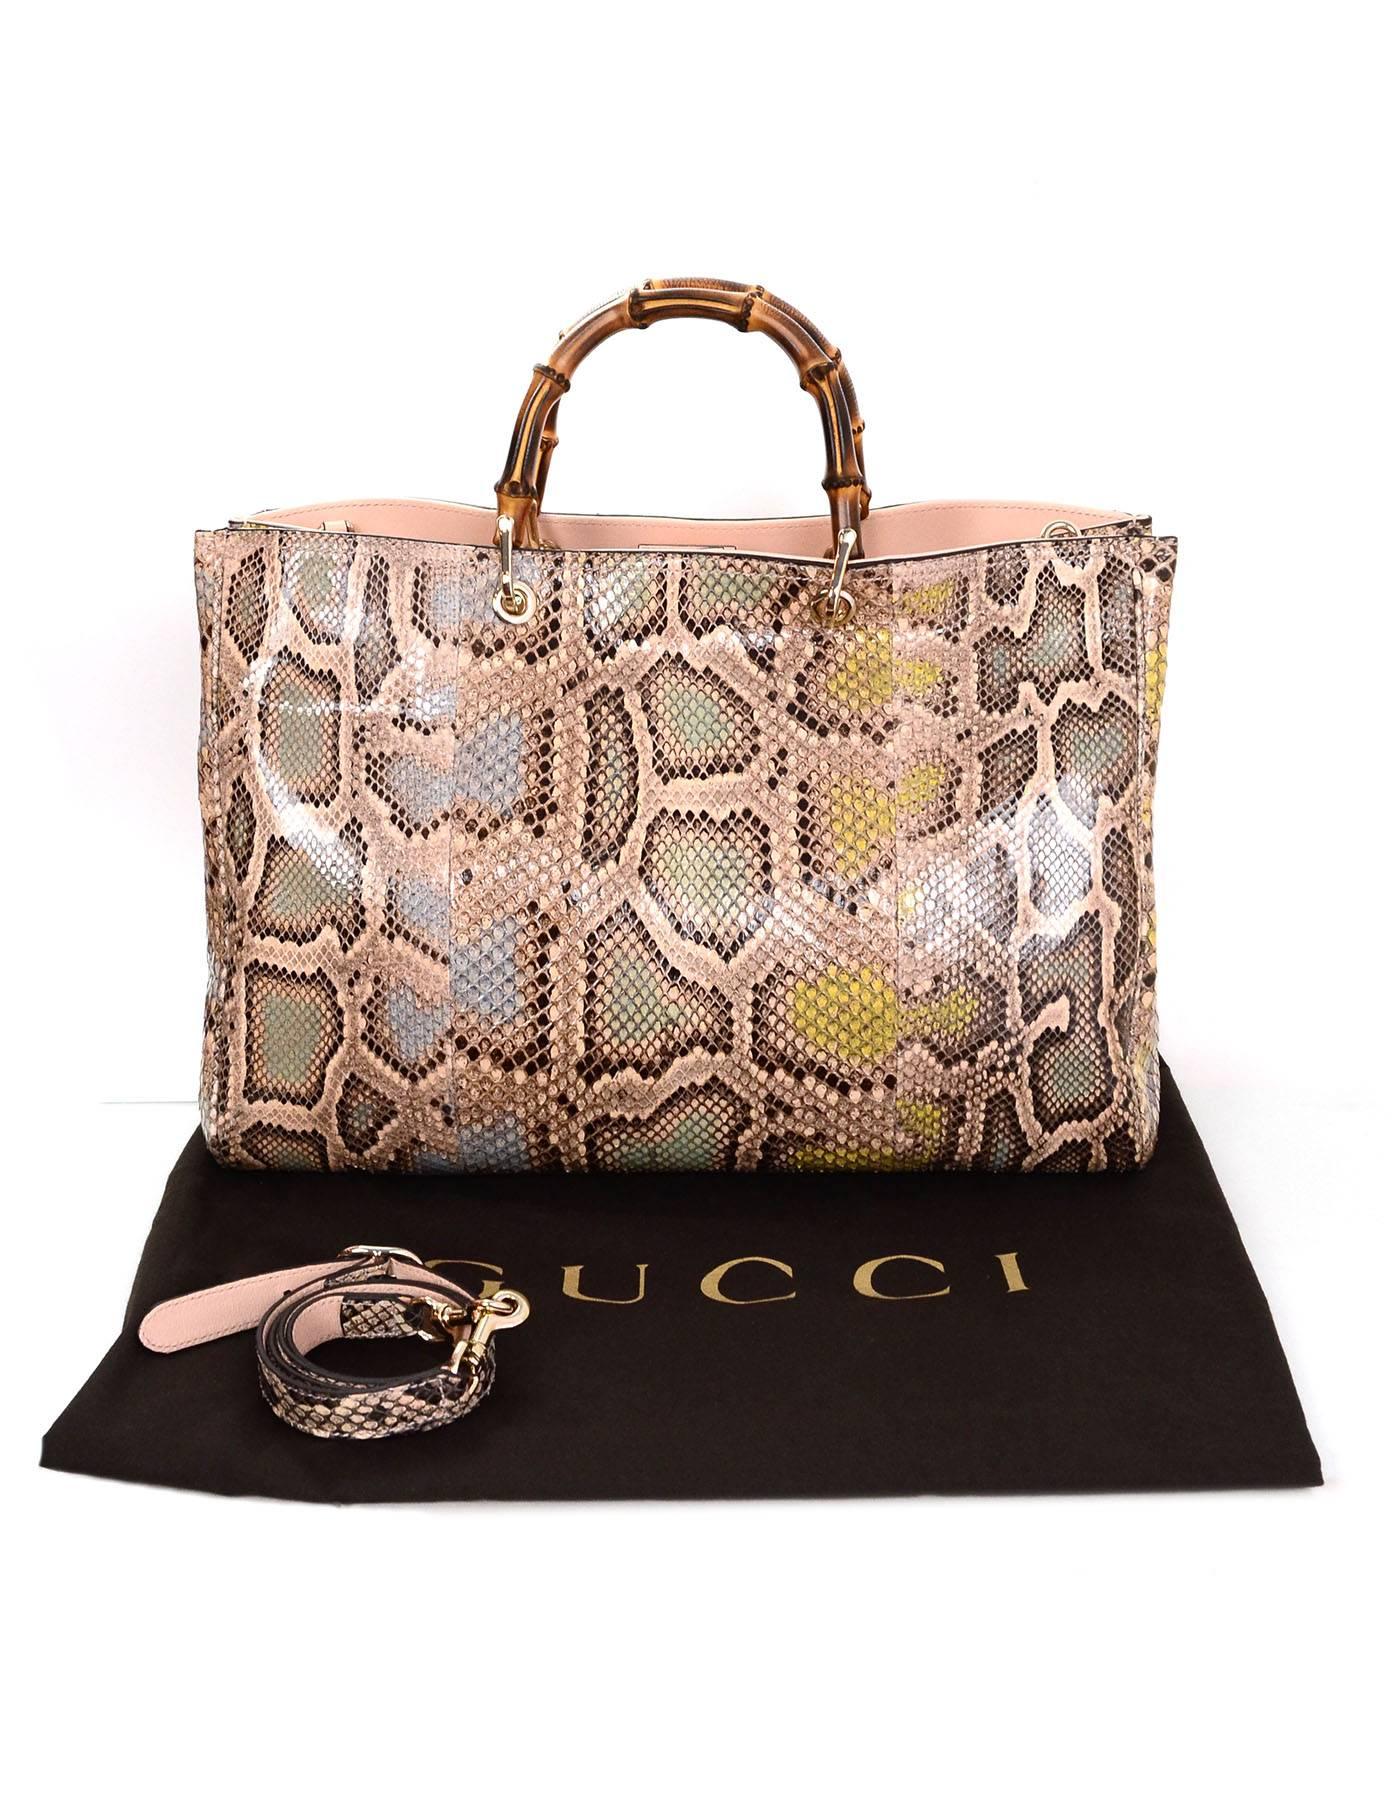 Gucci Blush Python Large Shopper Tote Bag w. Bamboo Handles rt. $3, 800  2